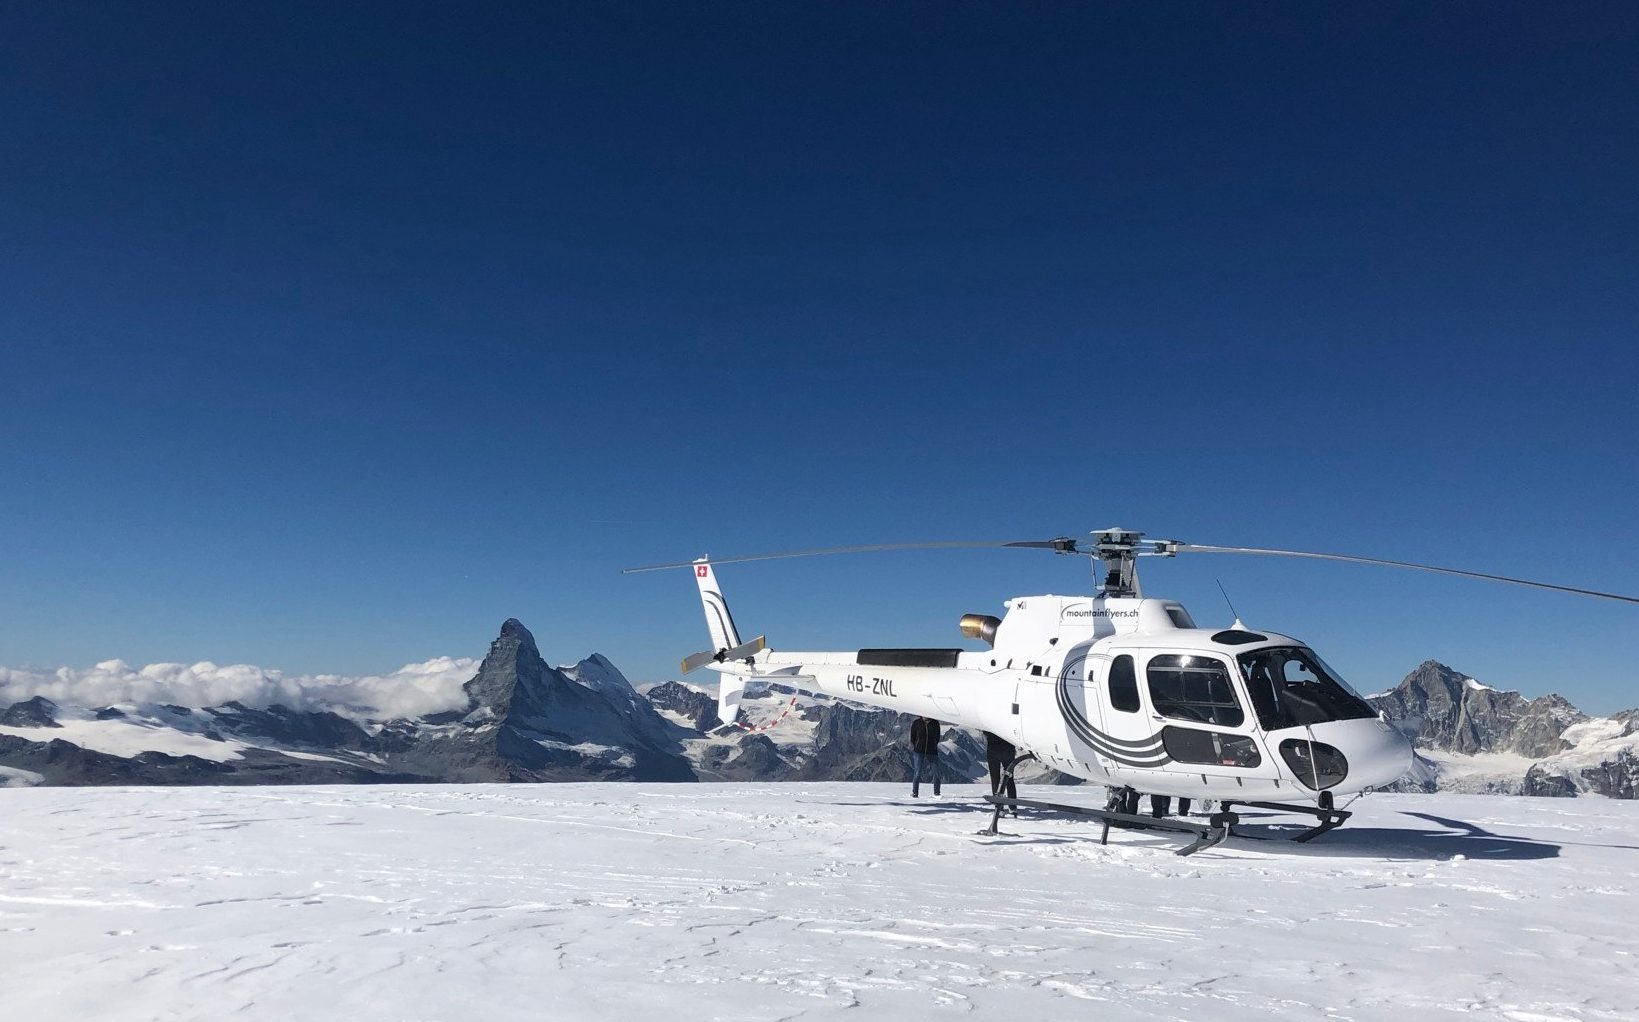 Helikopter auf Berggifel gelandet